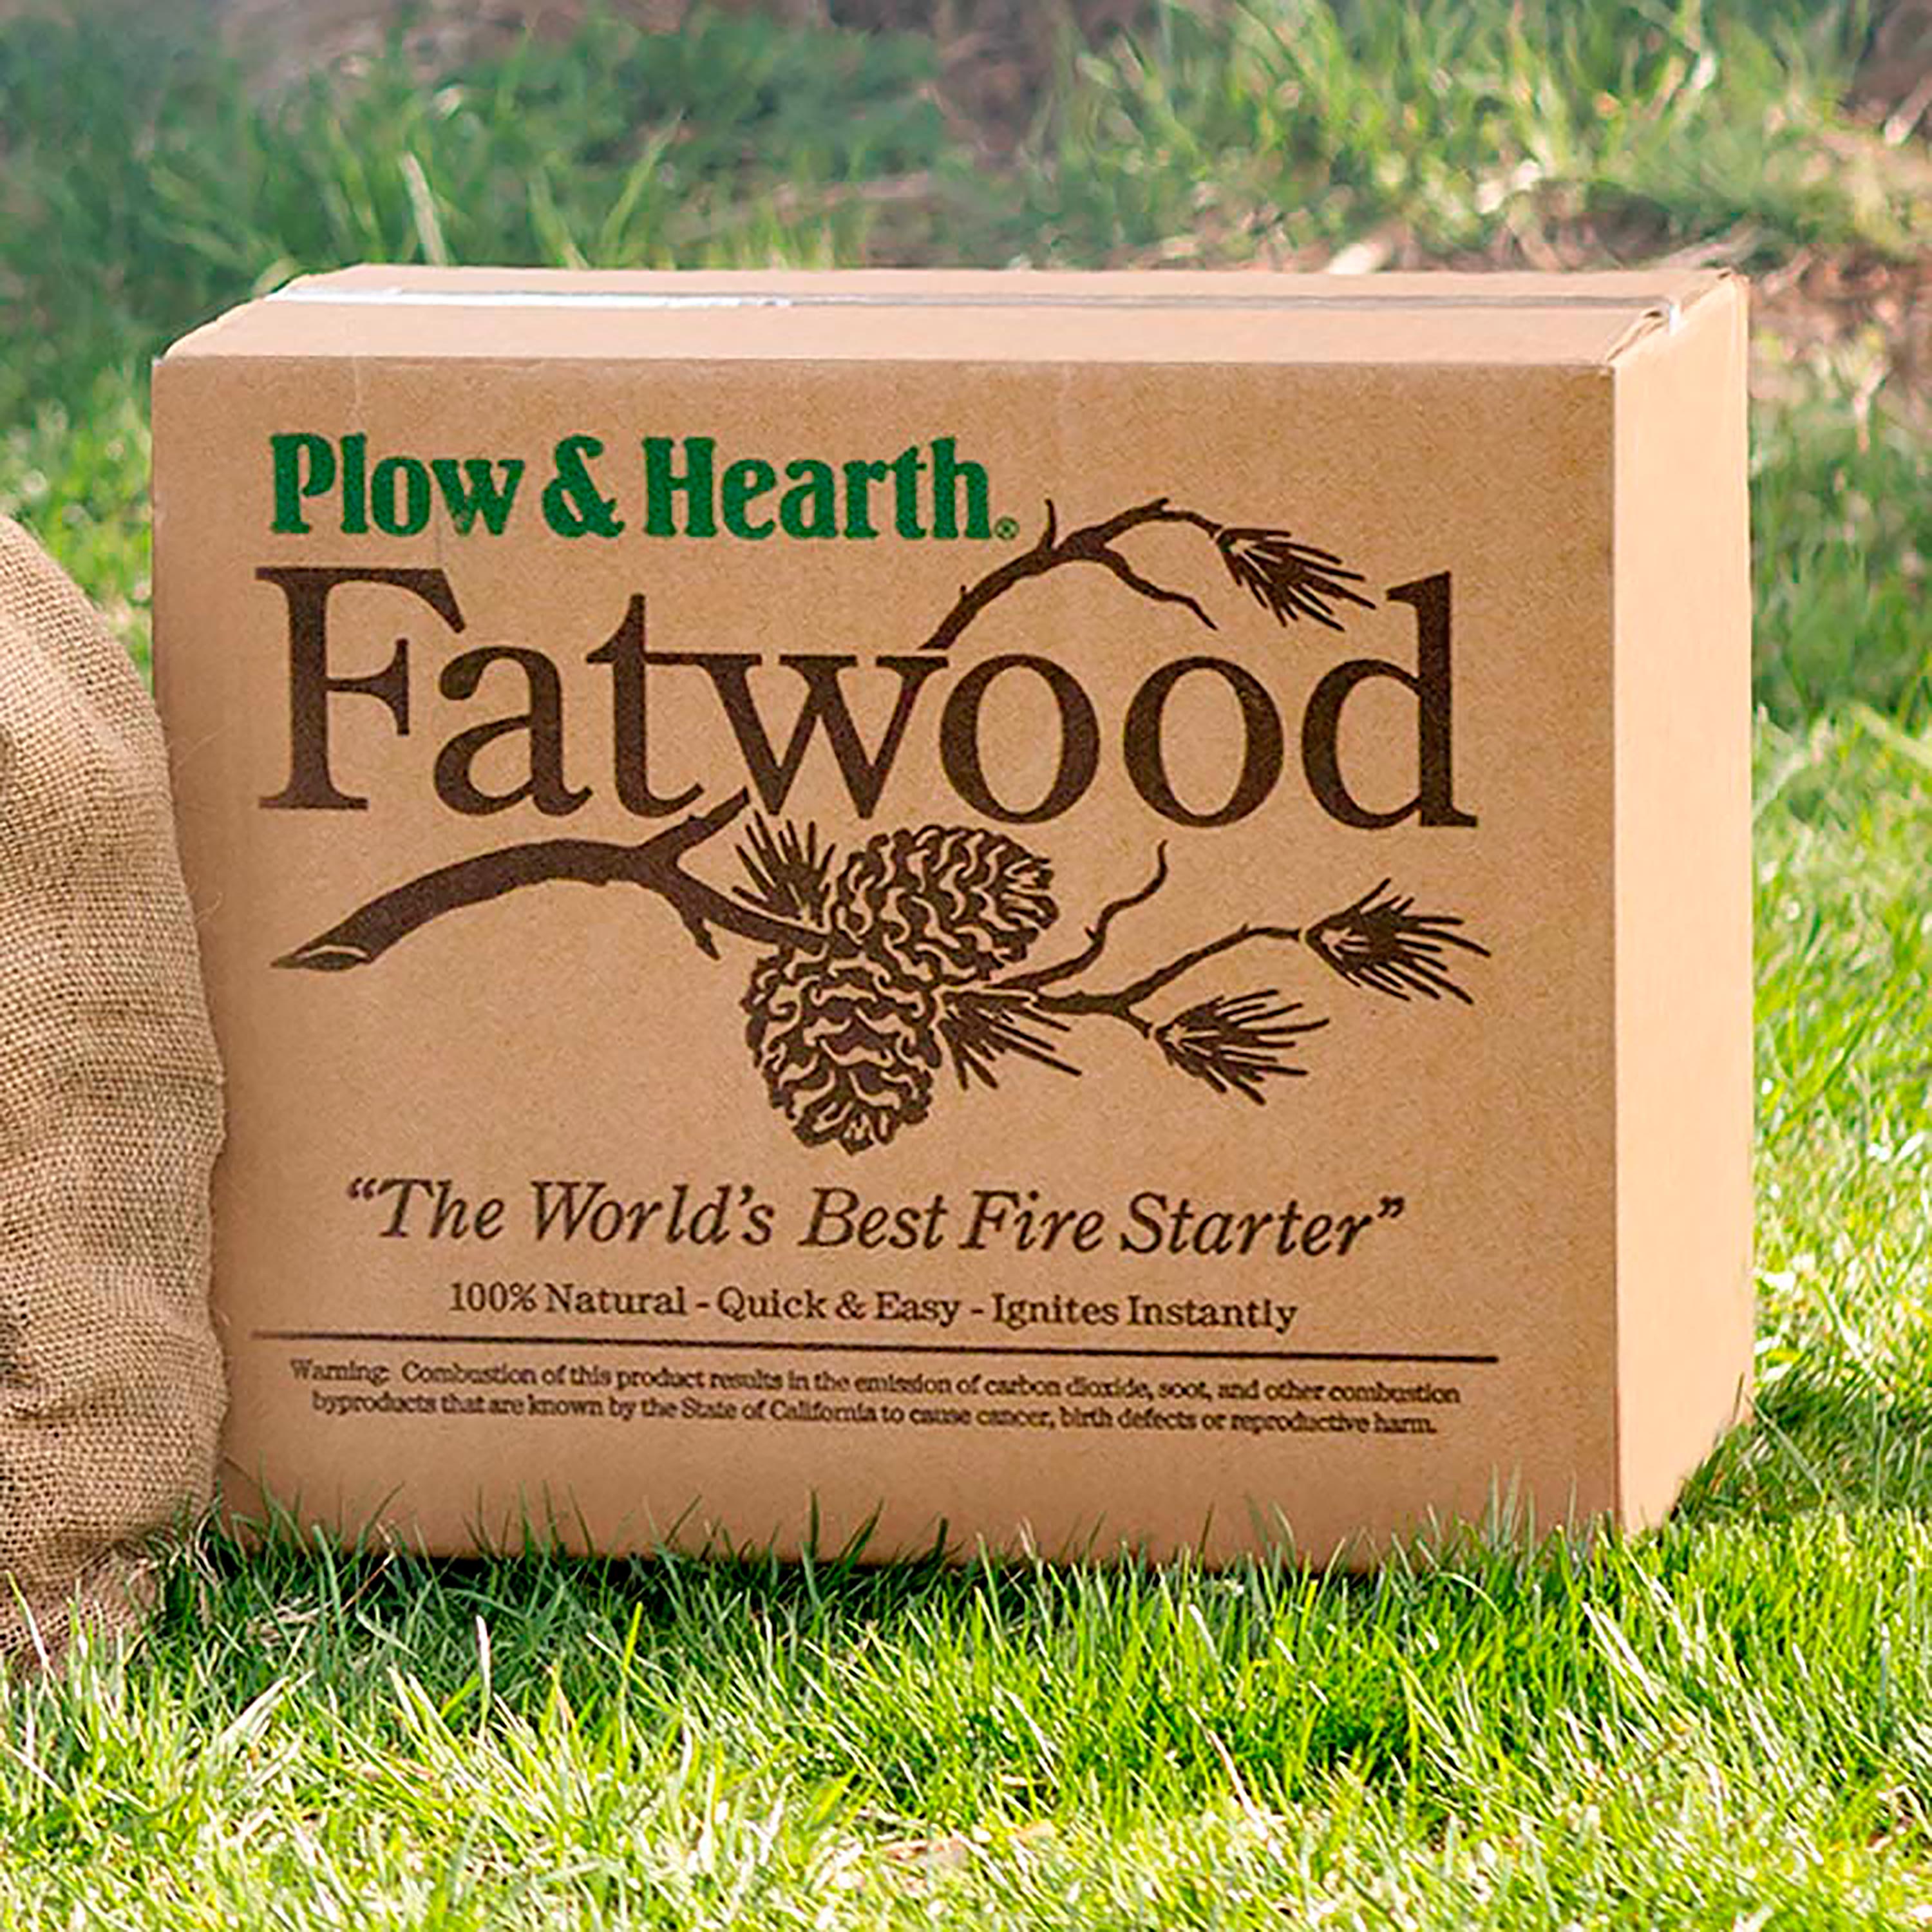 Fatwood Fire-Starter, 50 lb. Box